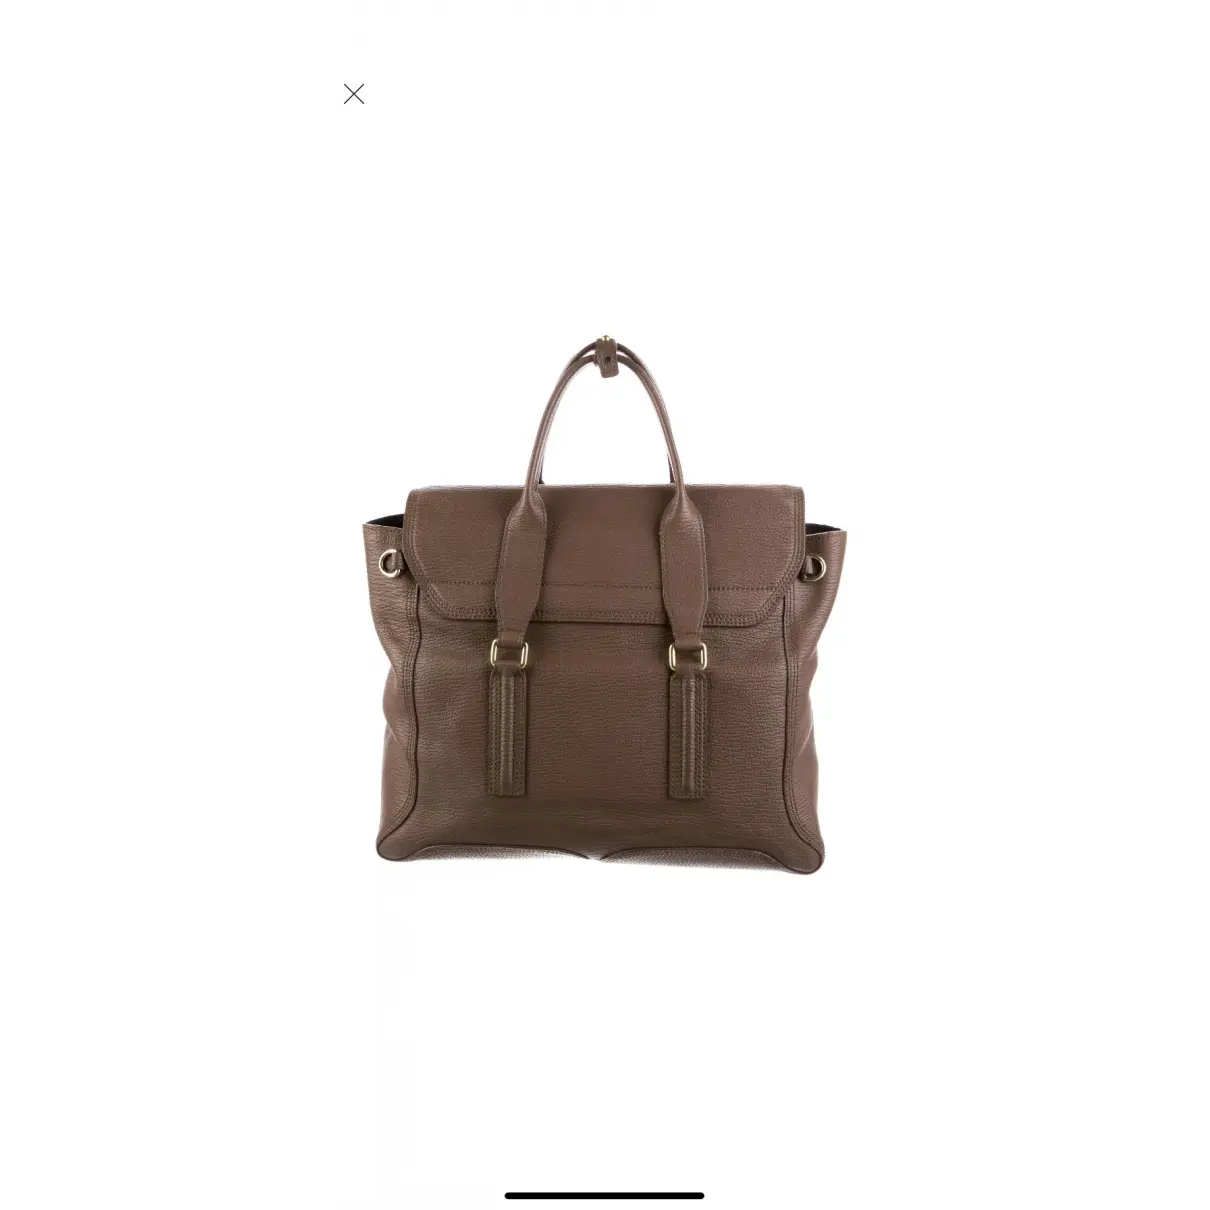 Buy 3.1 Phillip Lim Leather satchel online